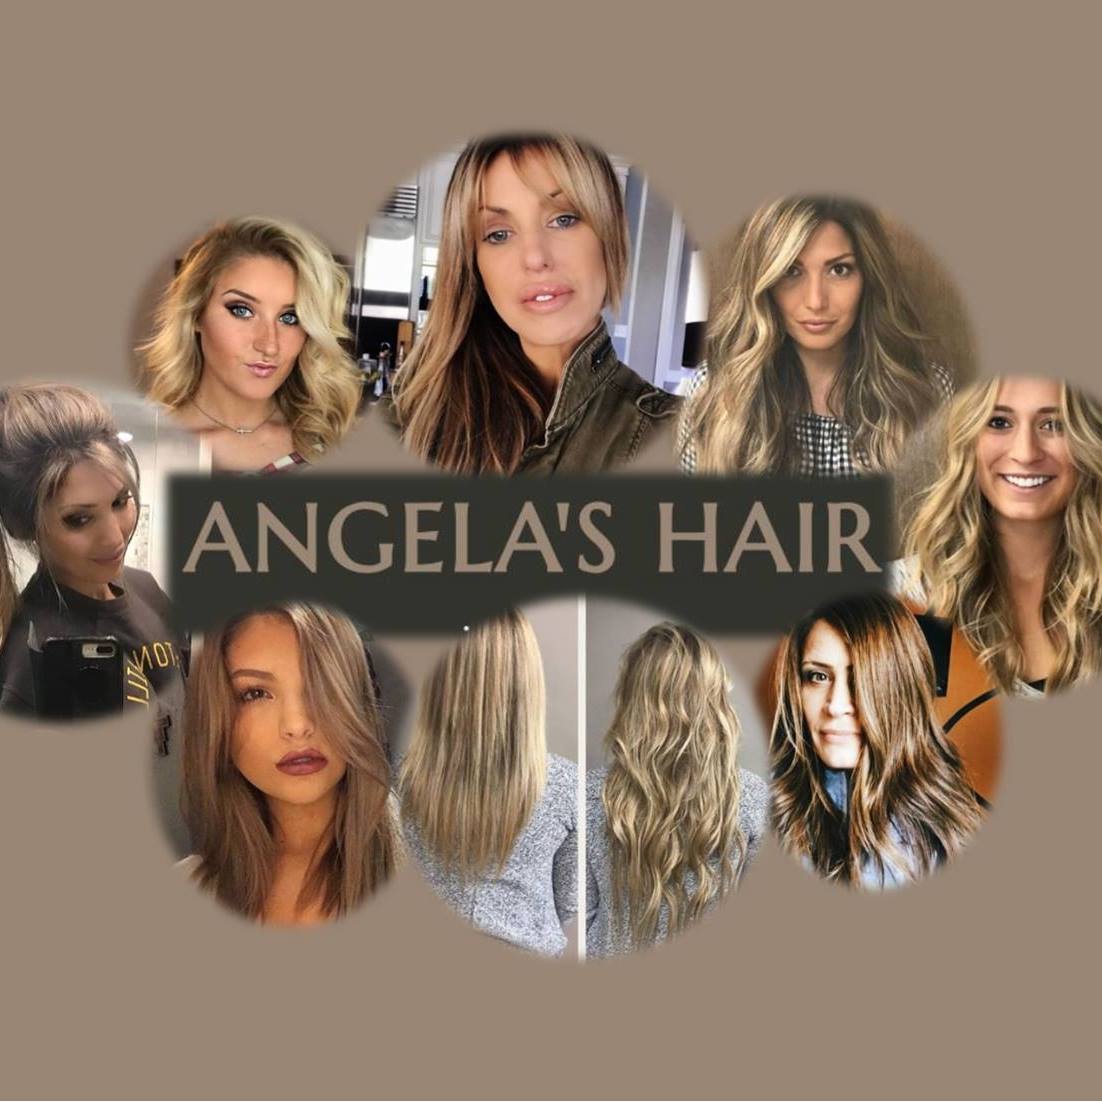 Angela's Hair